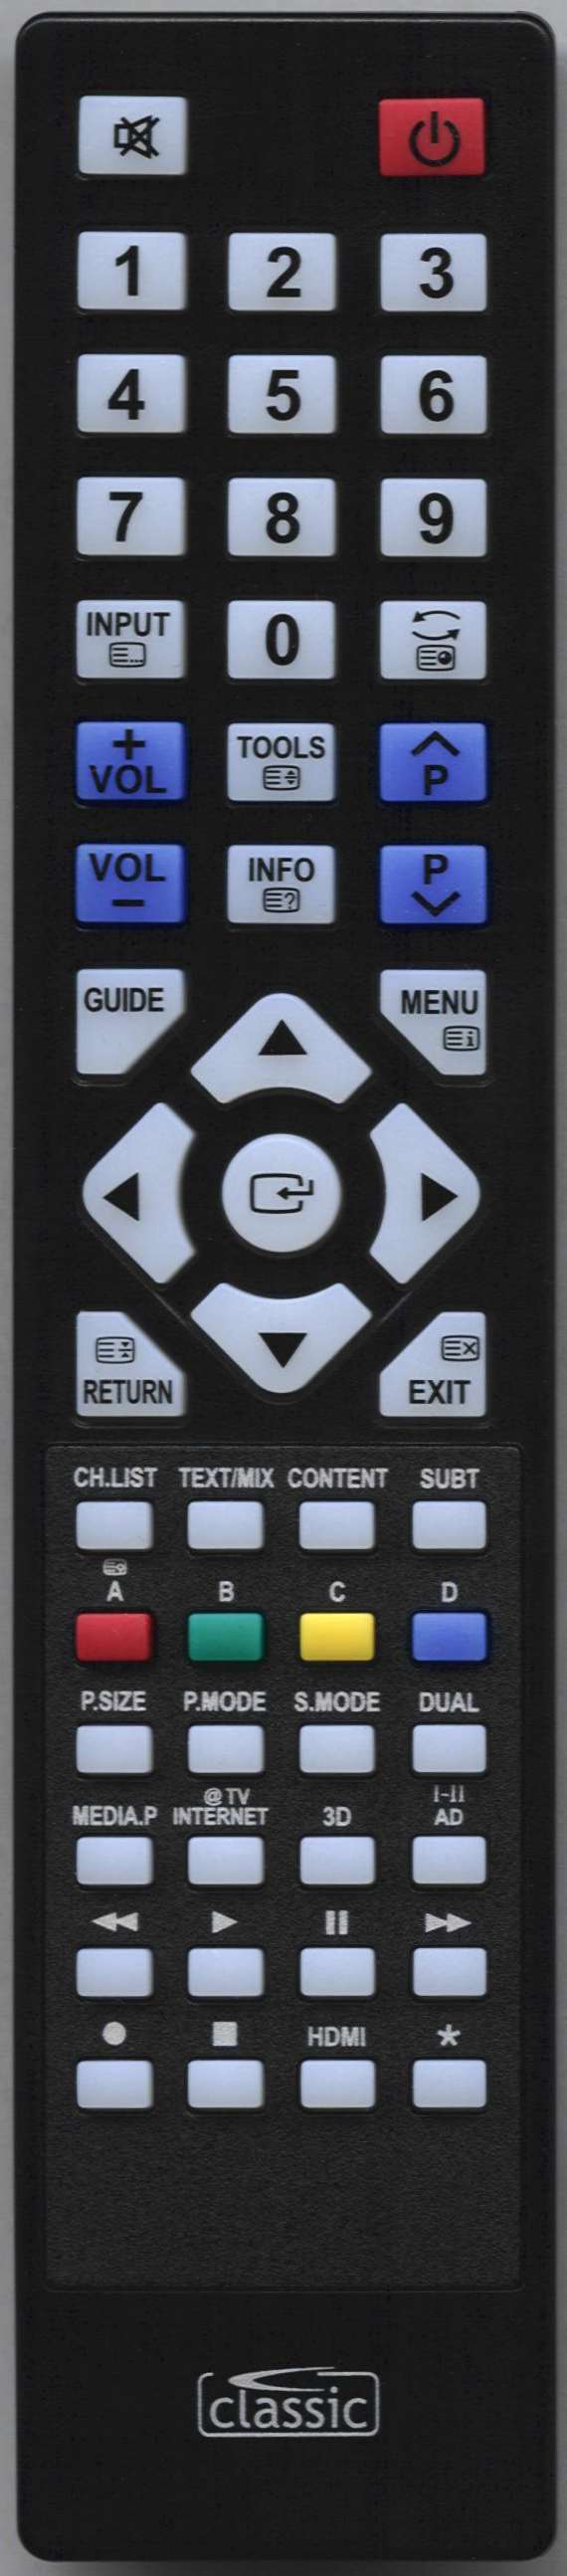 SAMSUNG PS50C450B1WXRU Remote Control